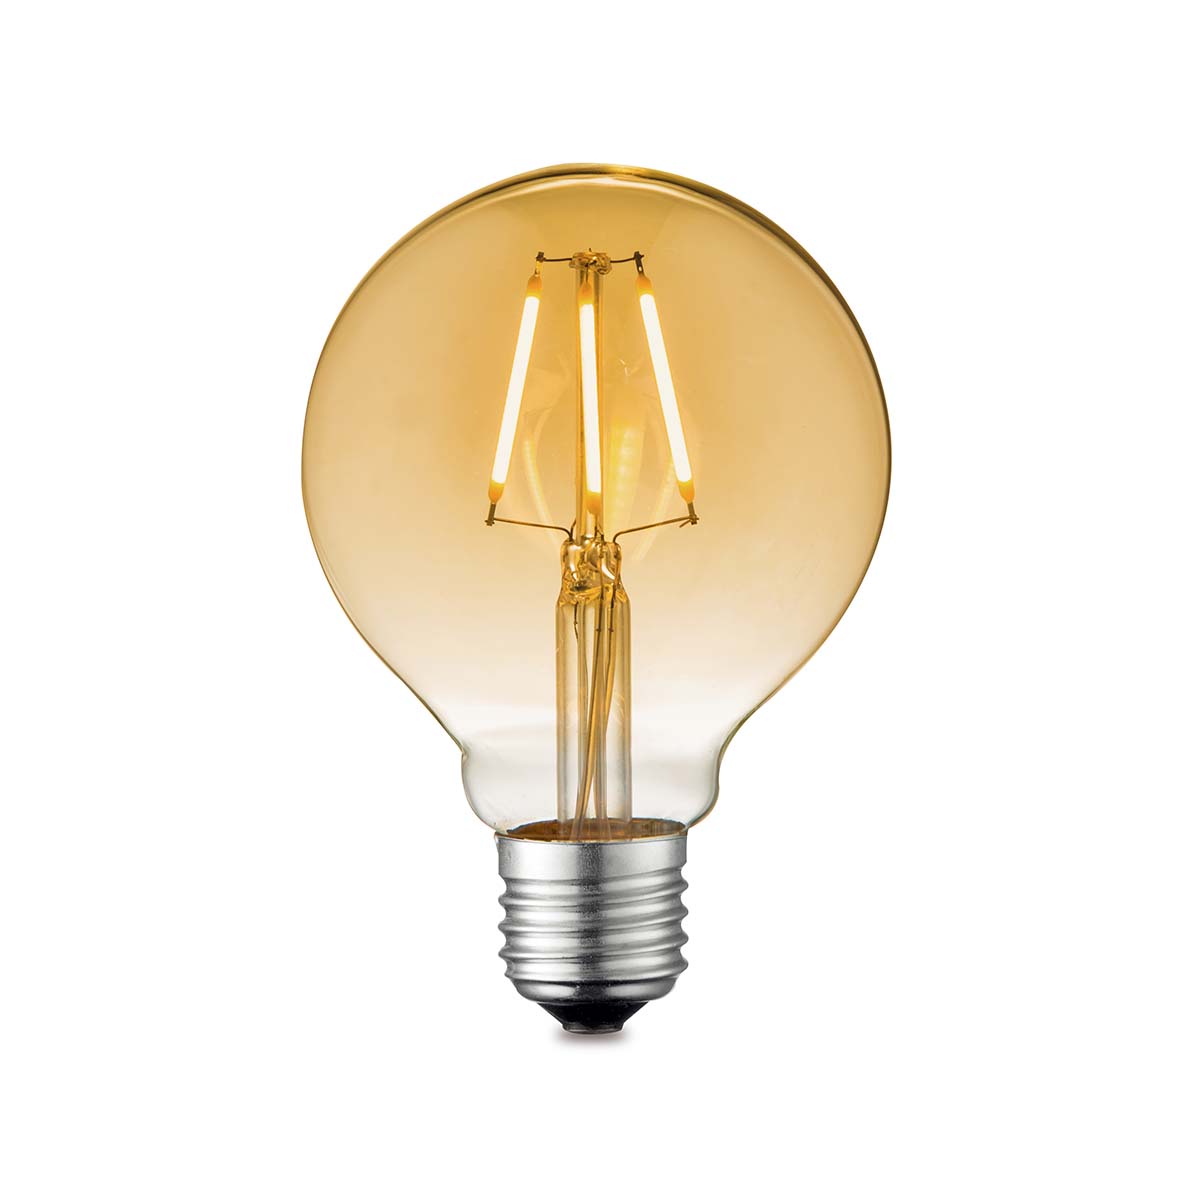 Tangla lighting - TLB-8003-02AM - LED Light Bulb Deco filament - G80 2W amber - non dimmable - E27